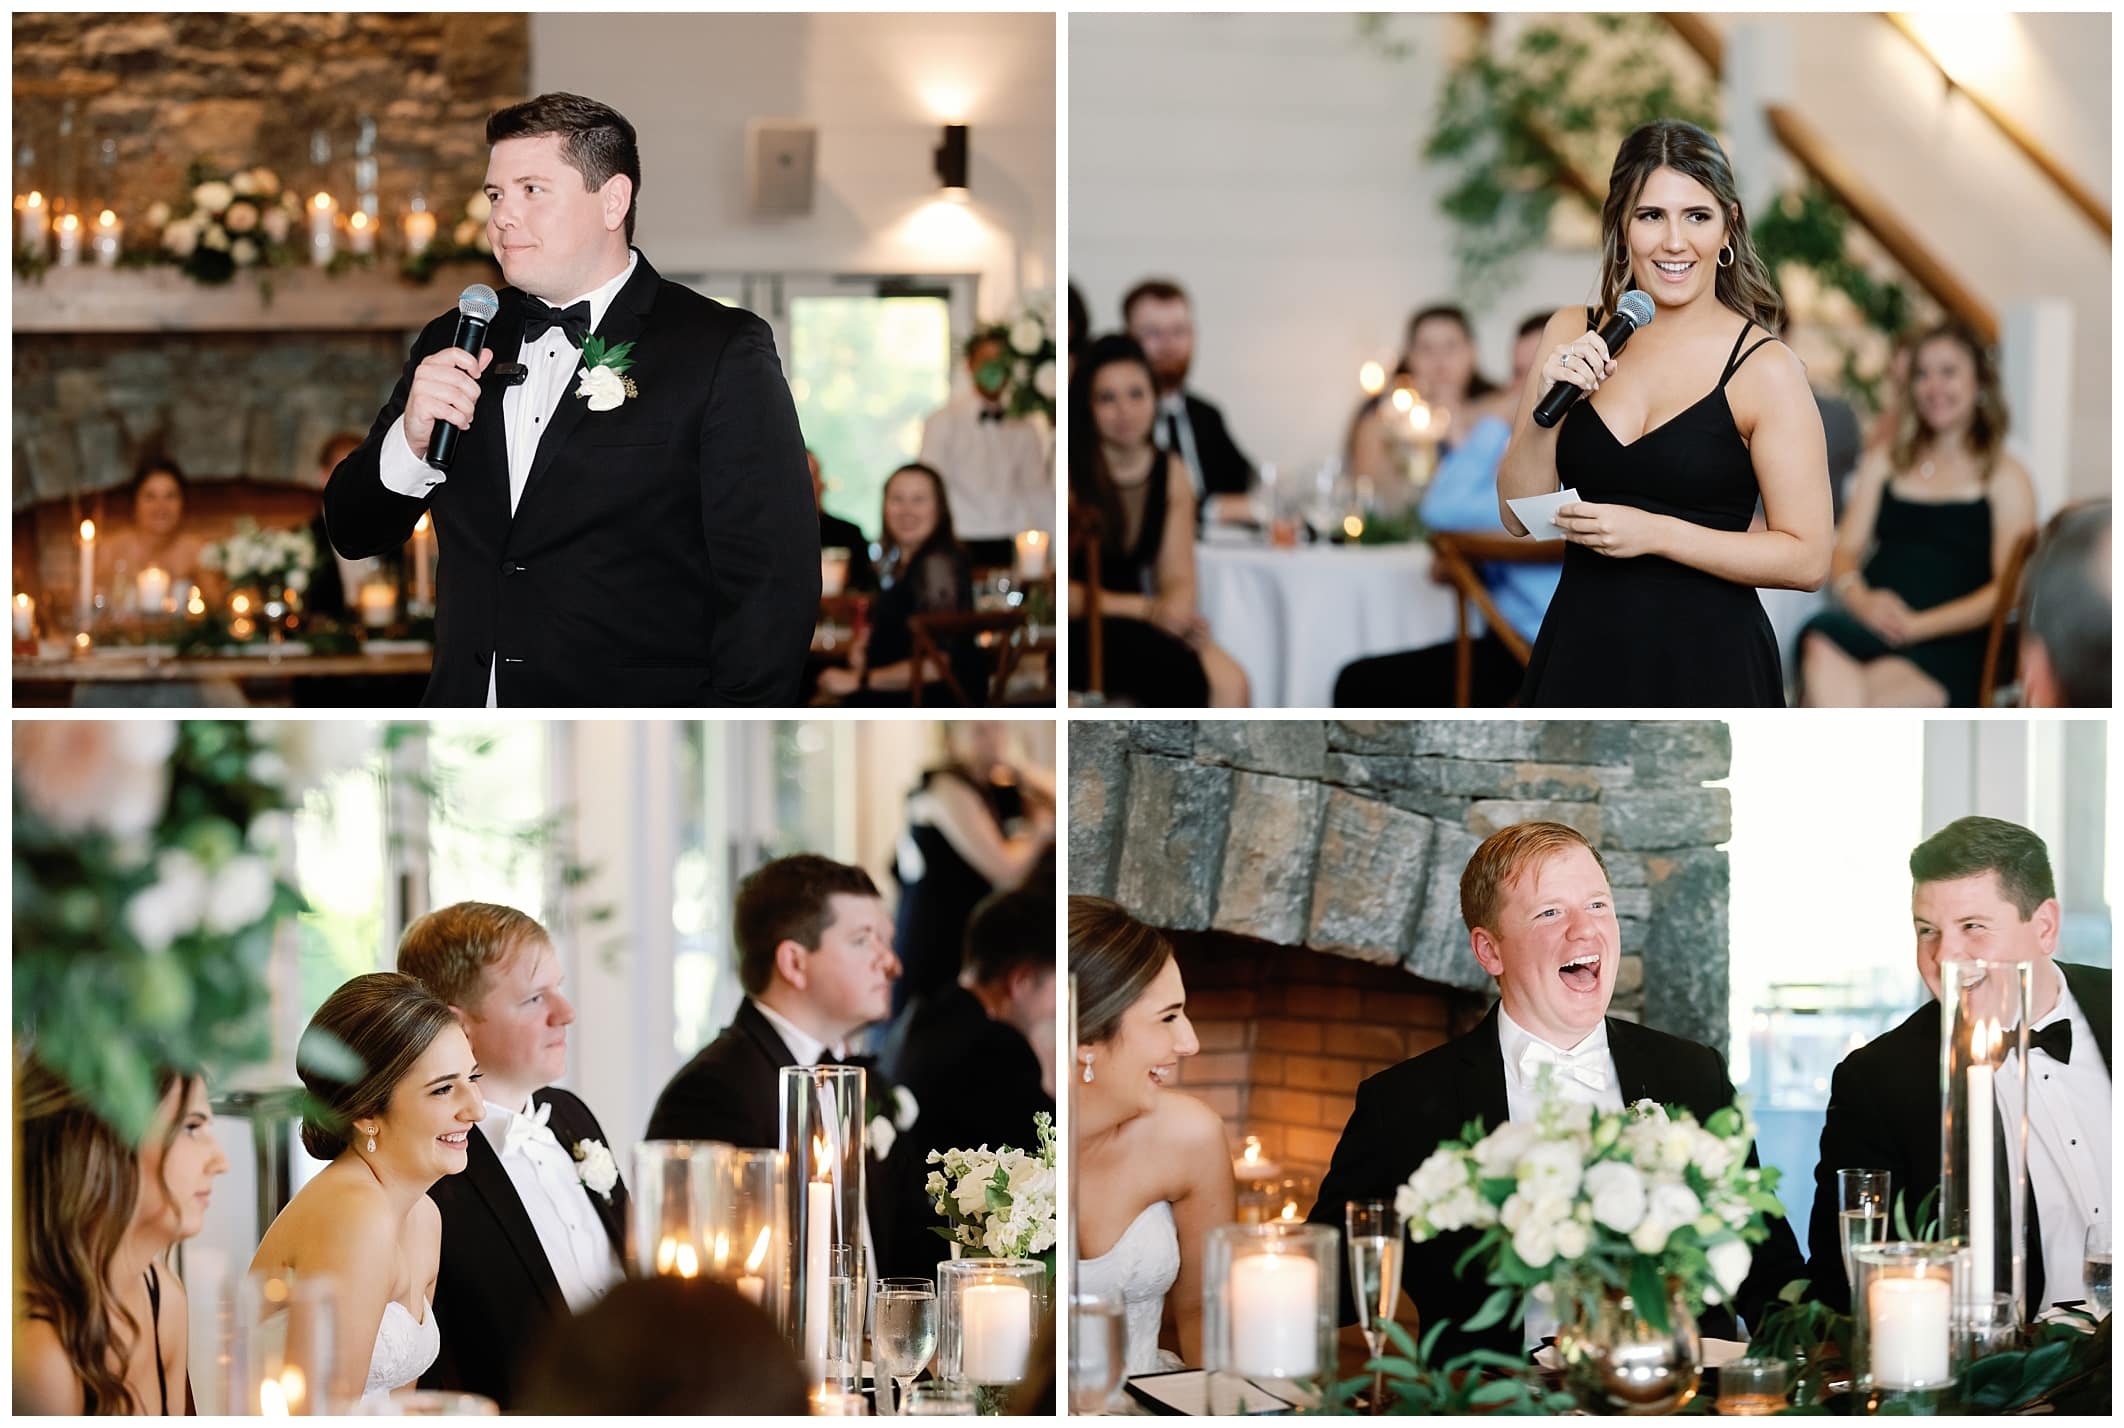 A collage of photos of a wedding reception.